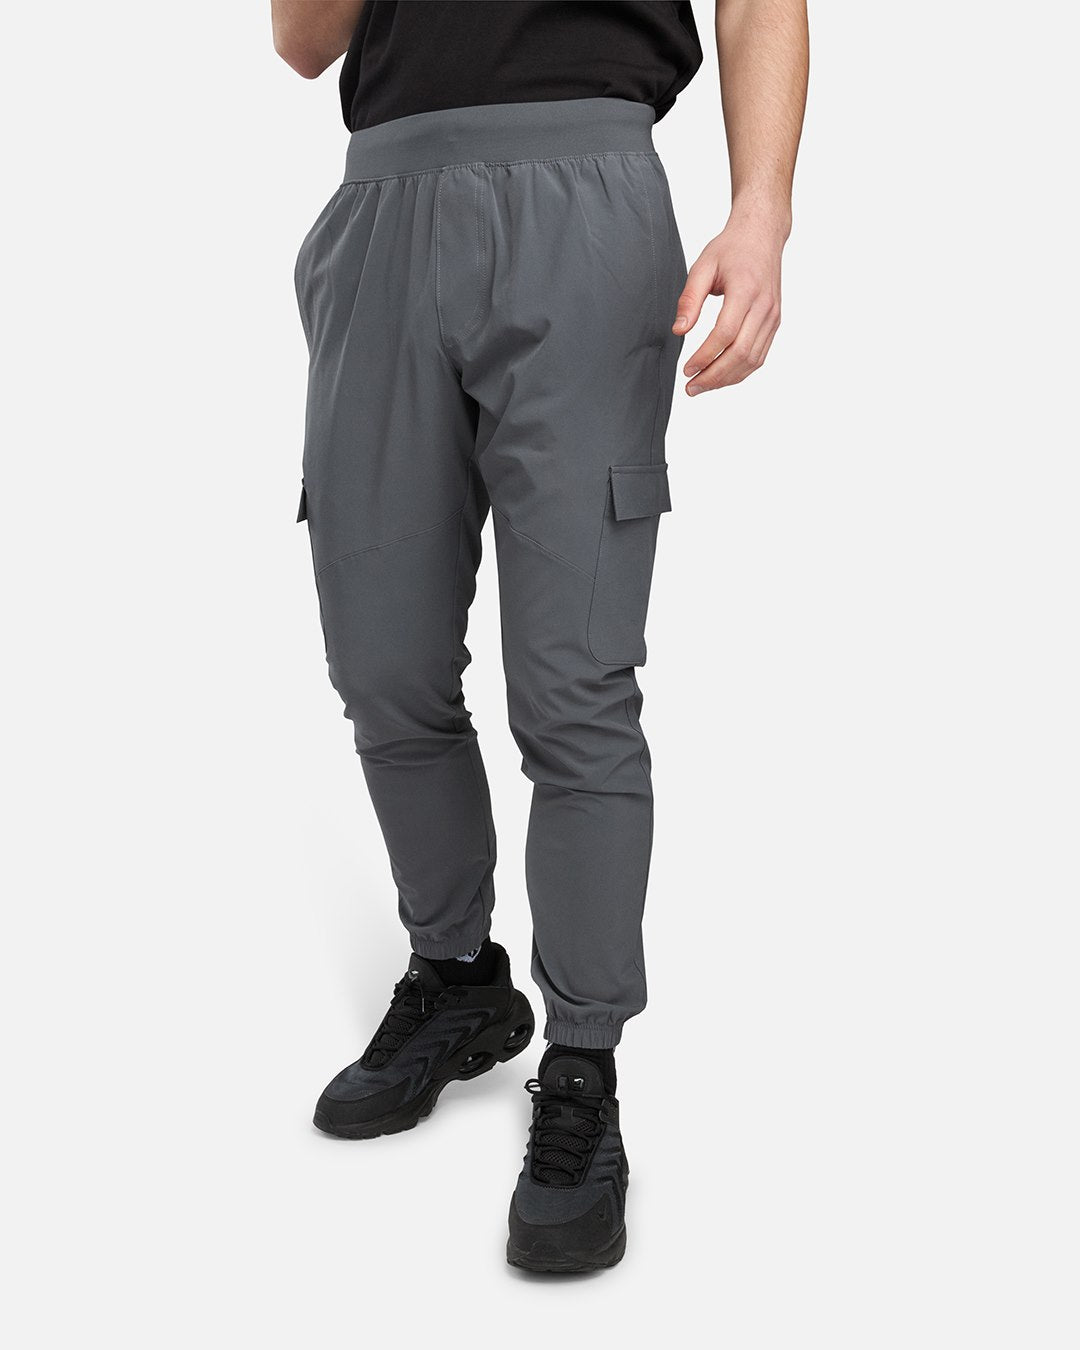 Pantalon Under Armour Stretch Woven – Grau/Schwarz